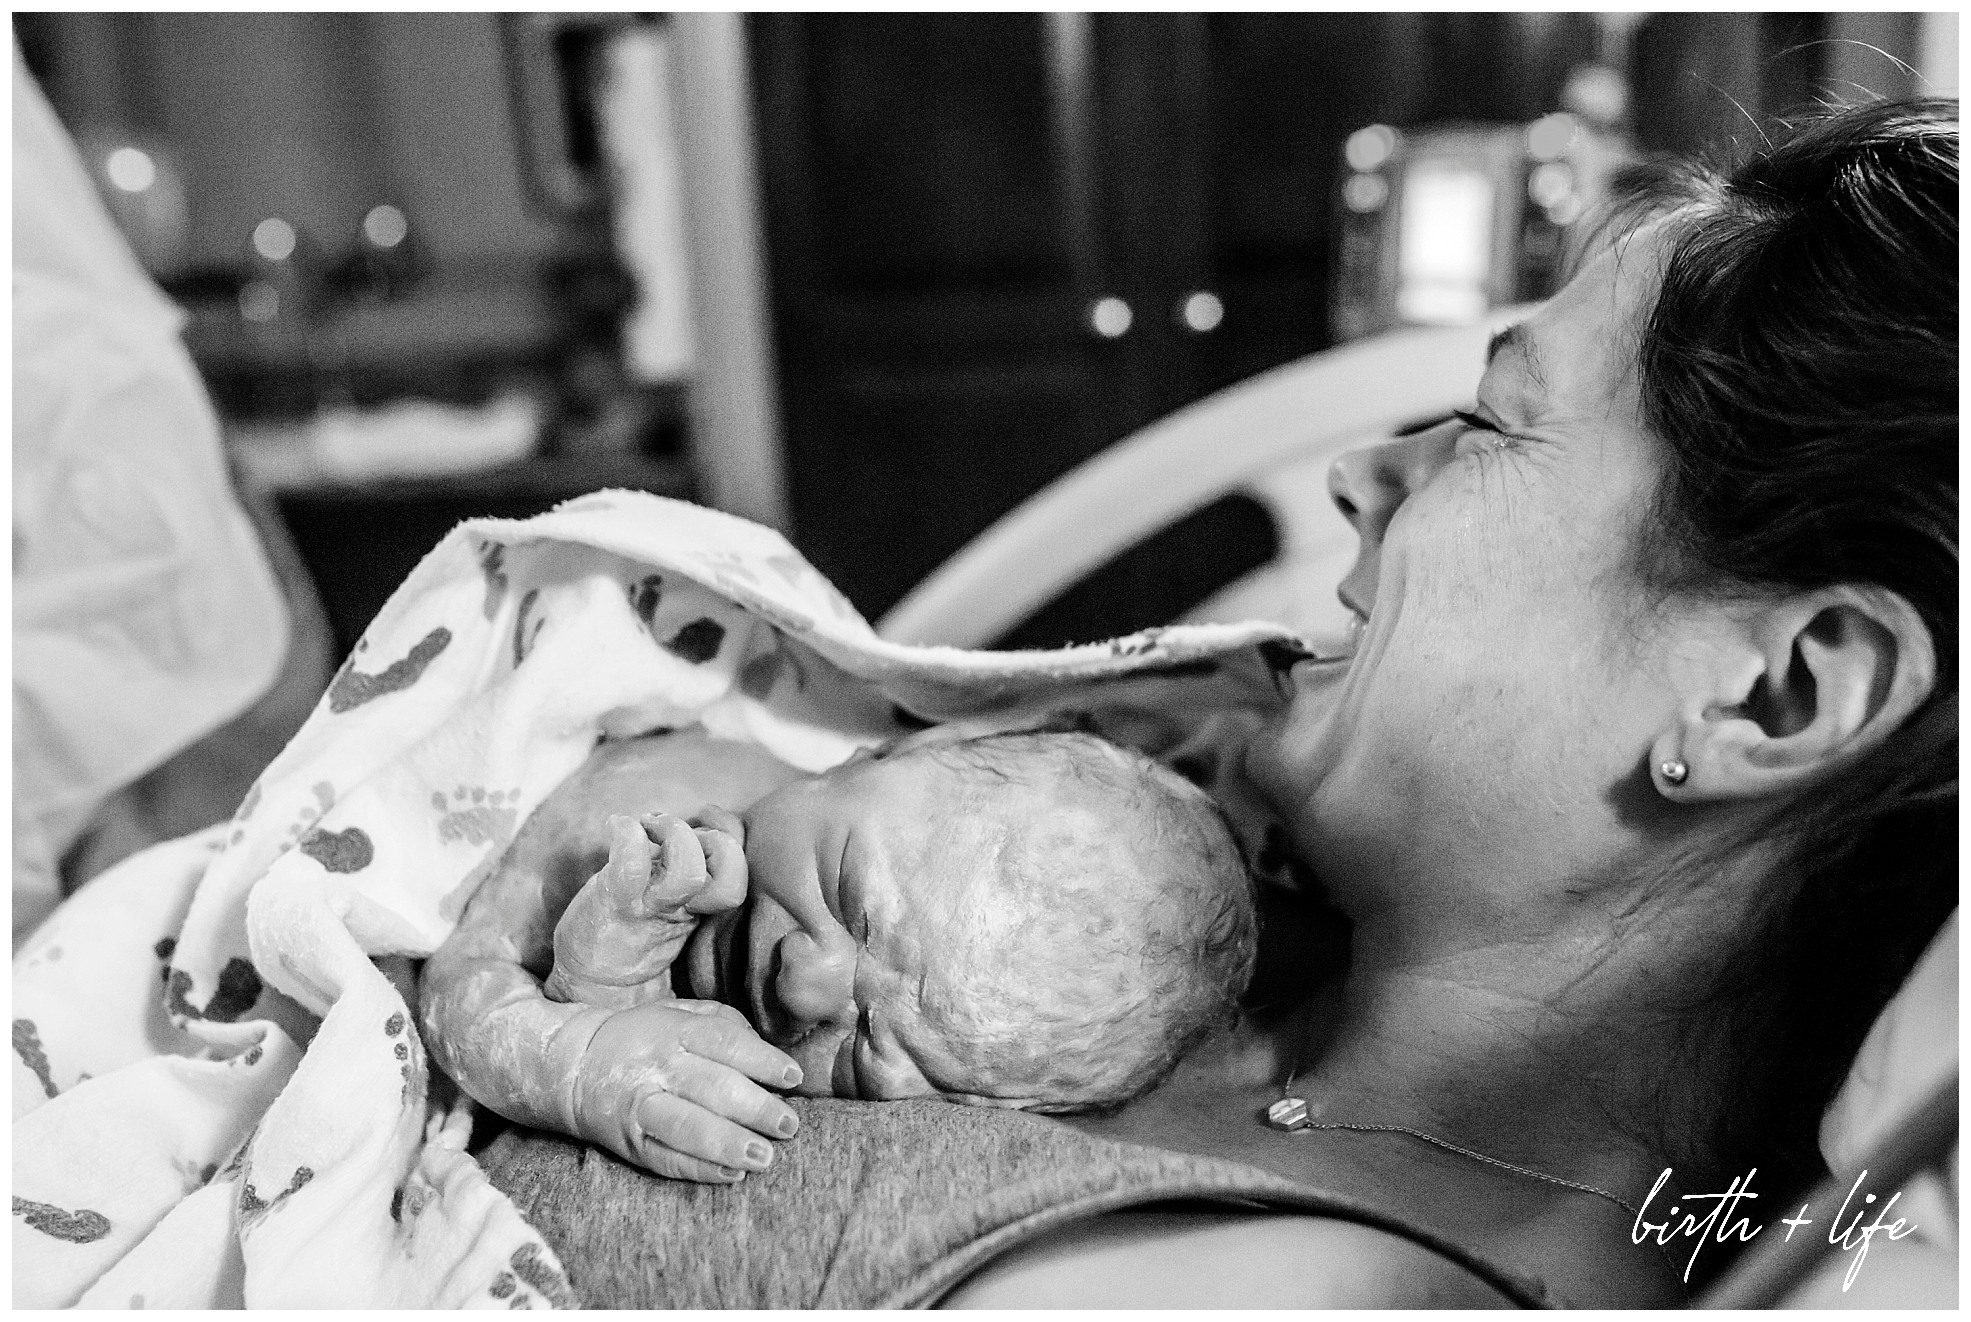 dfw-birth-and-life-photography-family-photojournalism-documentary-birth-storyacclaim-midwives-clark034.jpg